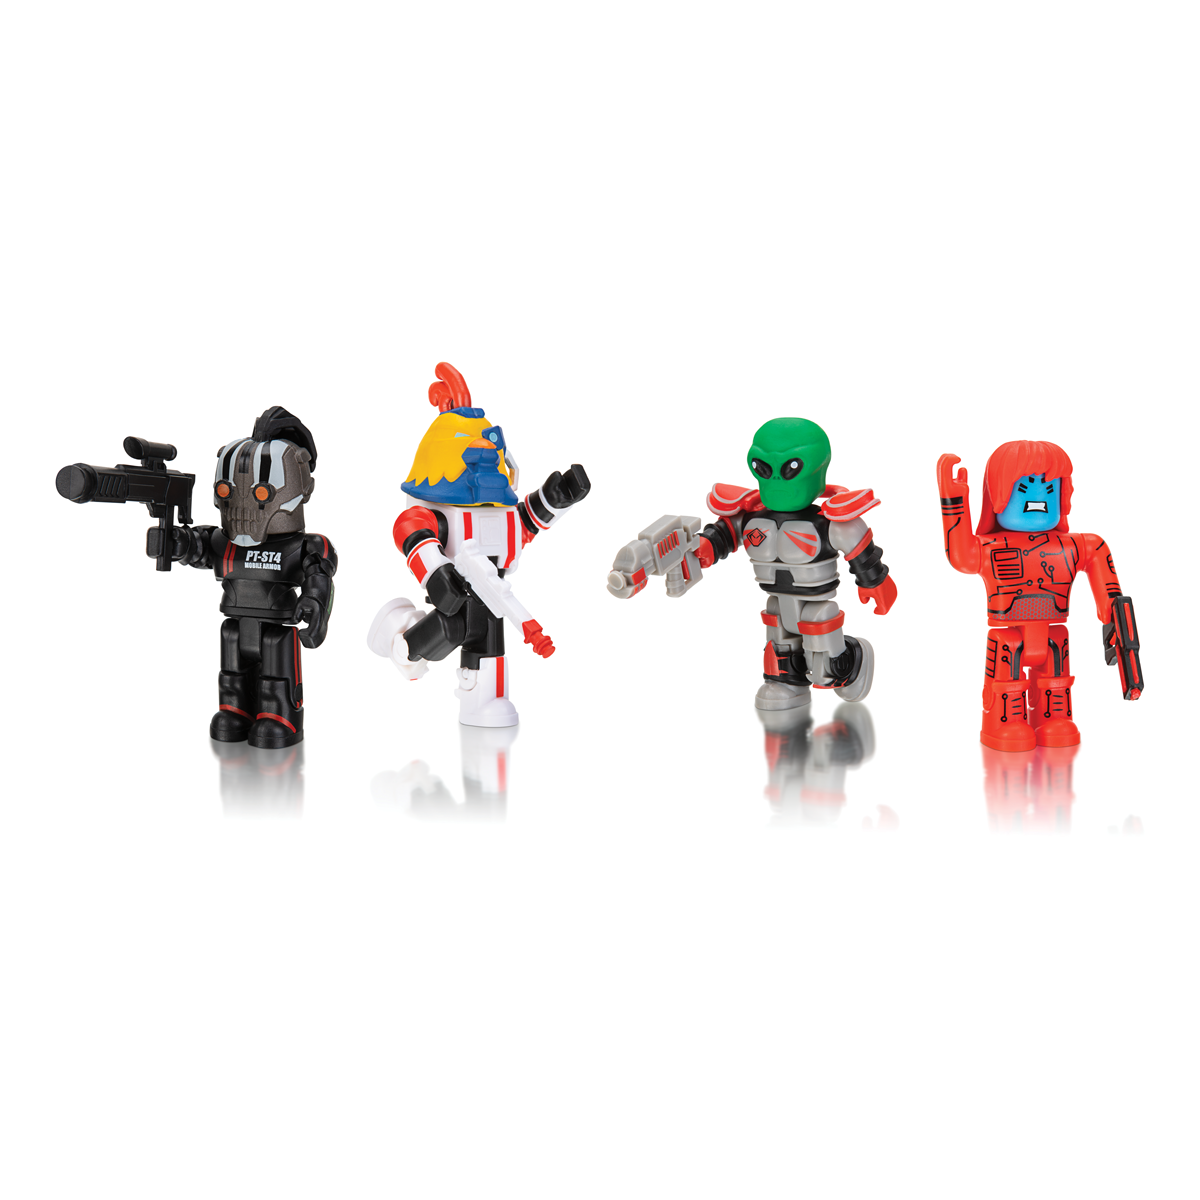 Roblox Star Commandos Mix And Match Figure Set The Entertainer - roblox figures robots blocks roblox blocks figure set 85cm